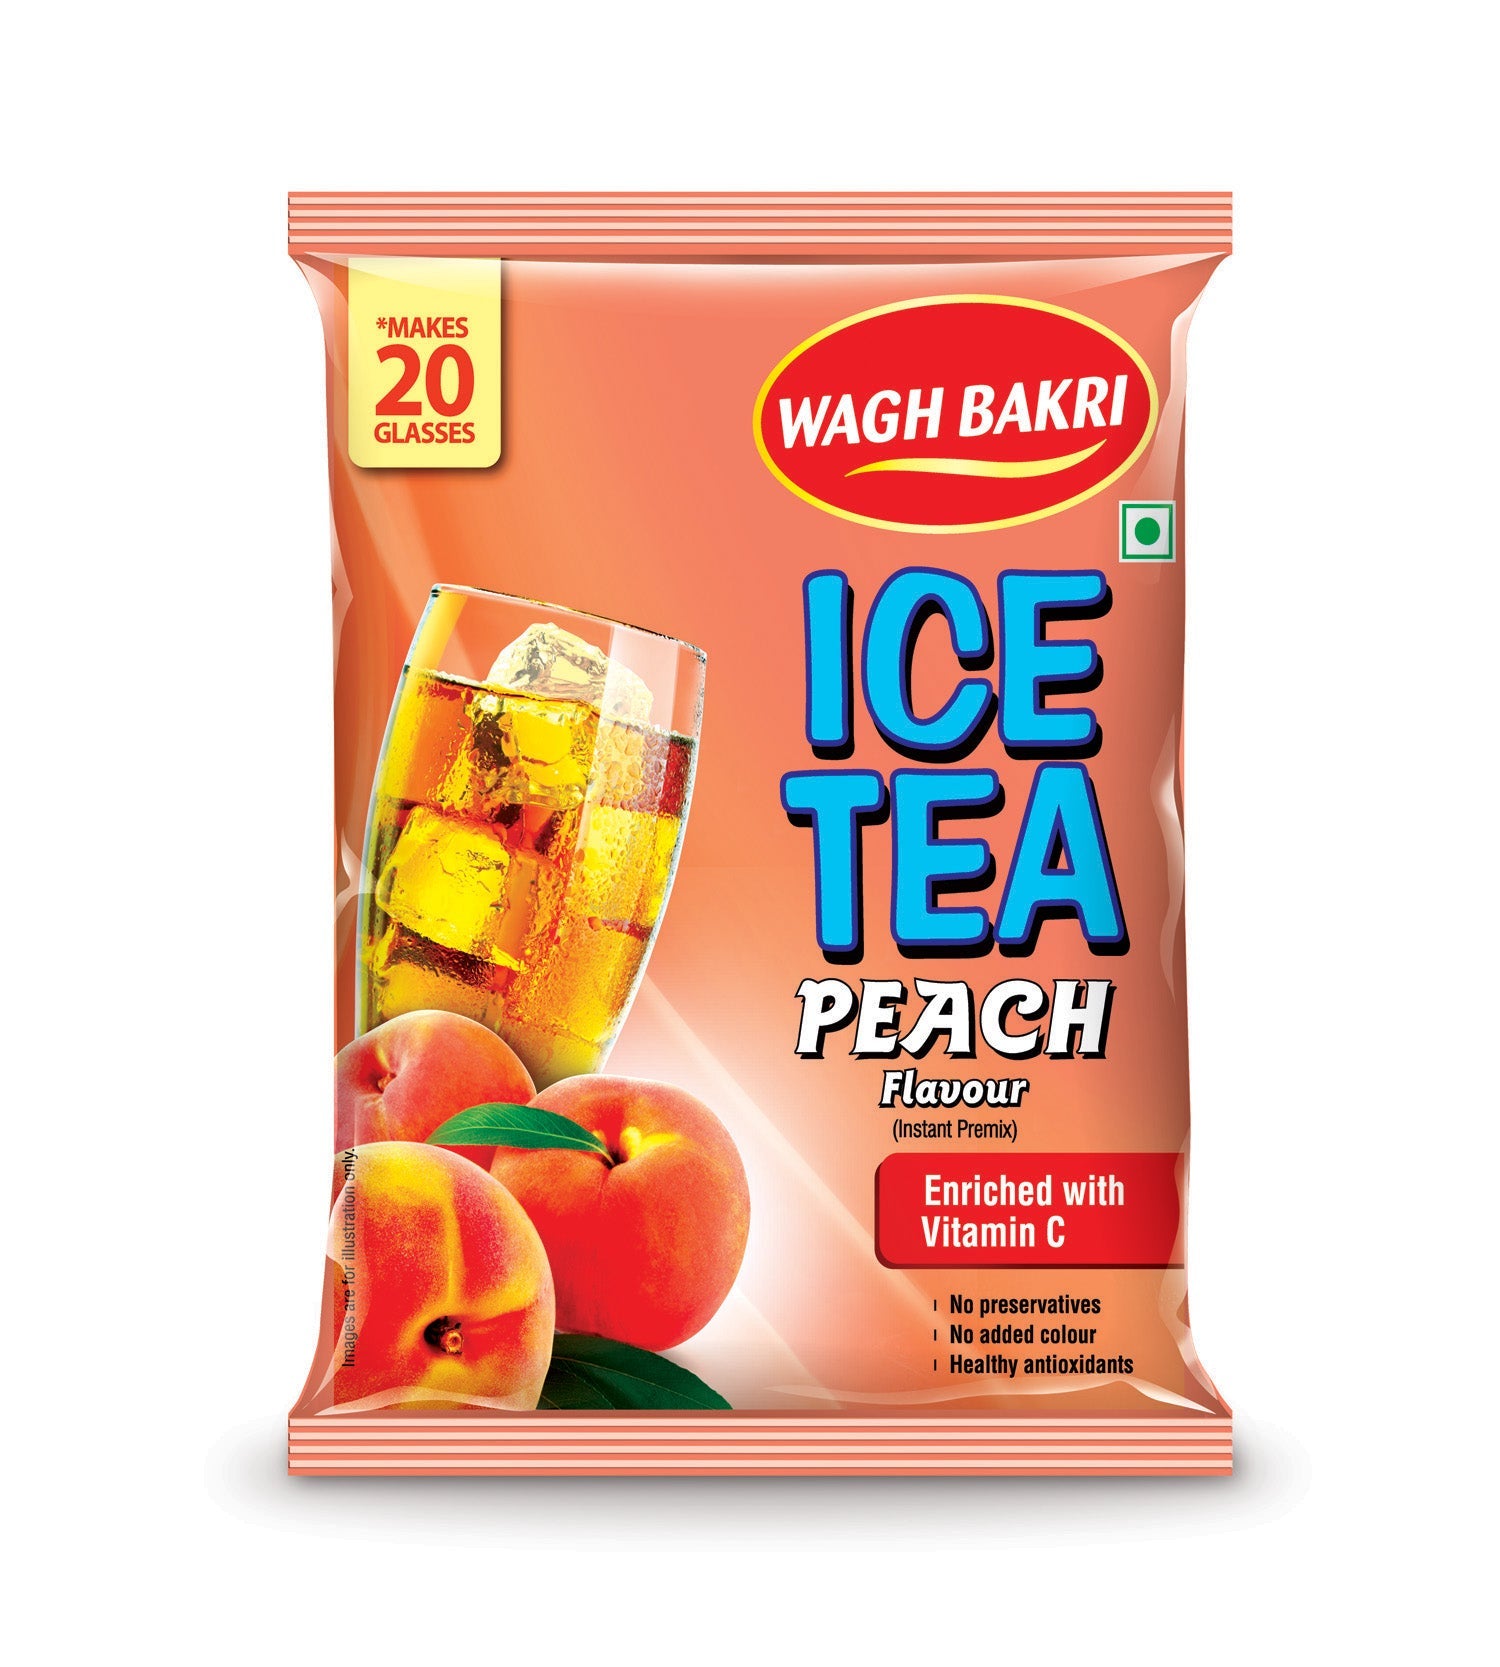 Wagh Bakri Ice Tea Buy 2 Get 2 free - Peach + Orange + Cranberry + Lemon